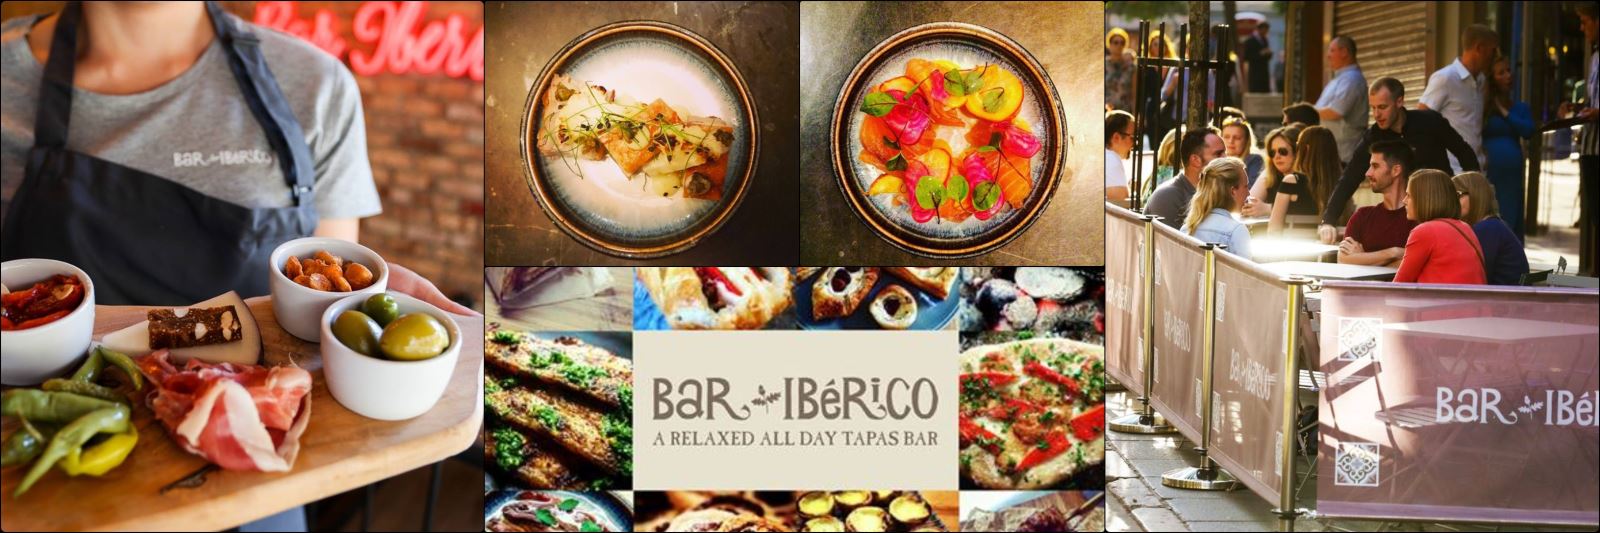 Bar Iberico Collage | Visit nottinghamshire